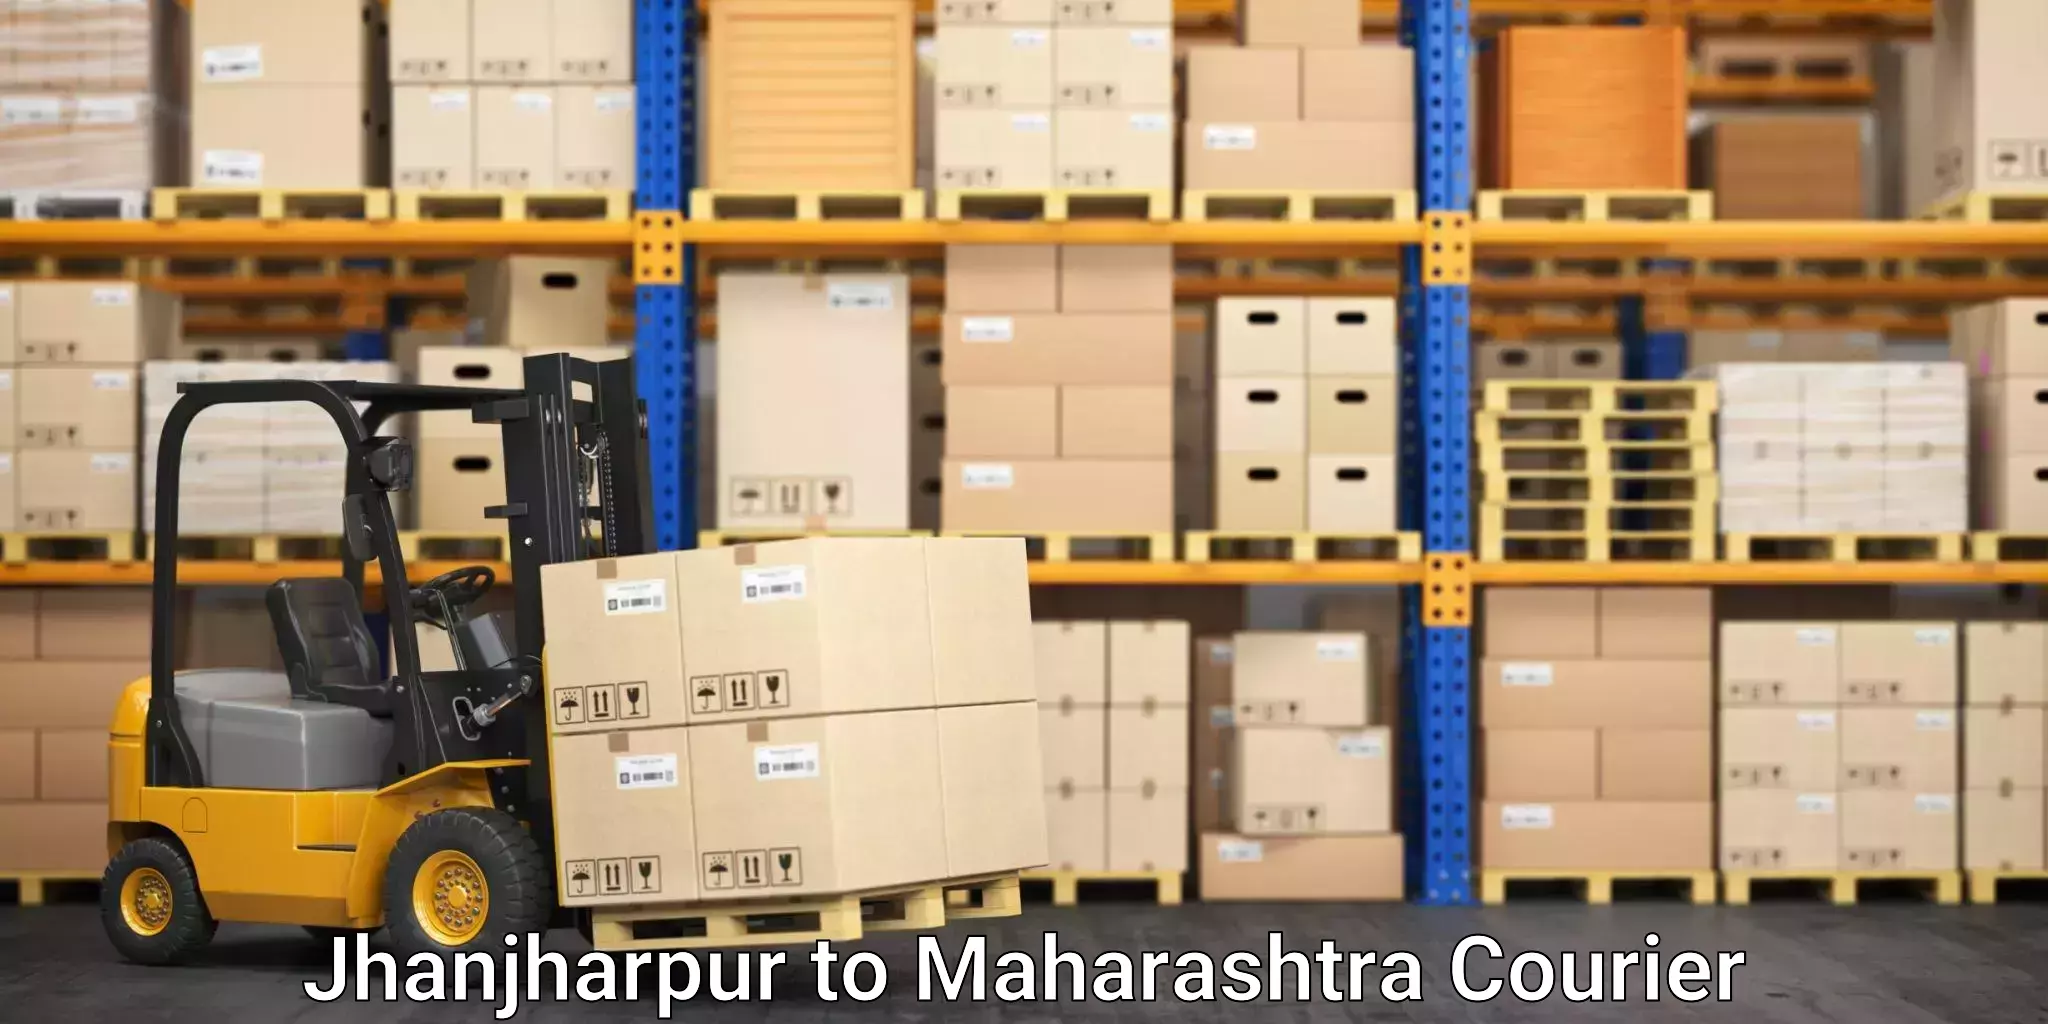 Furniture moving assistance in Jhanjharpur to Shringartali